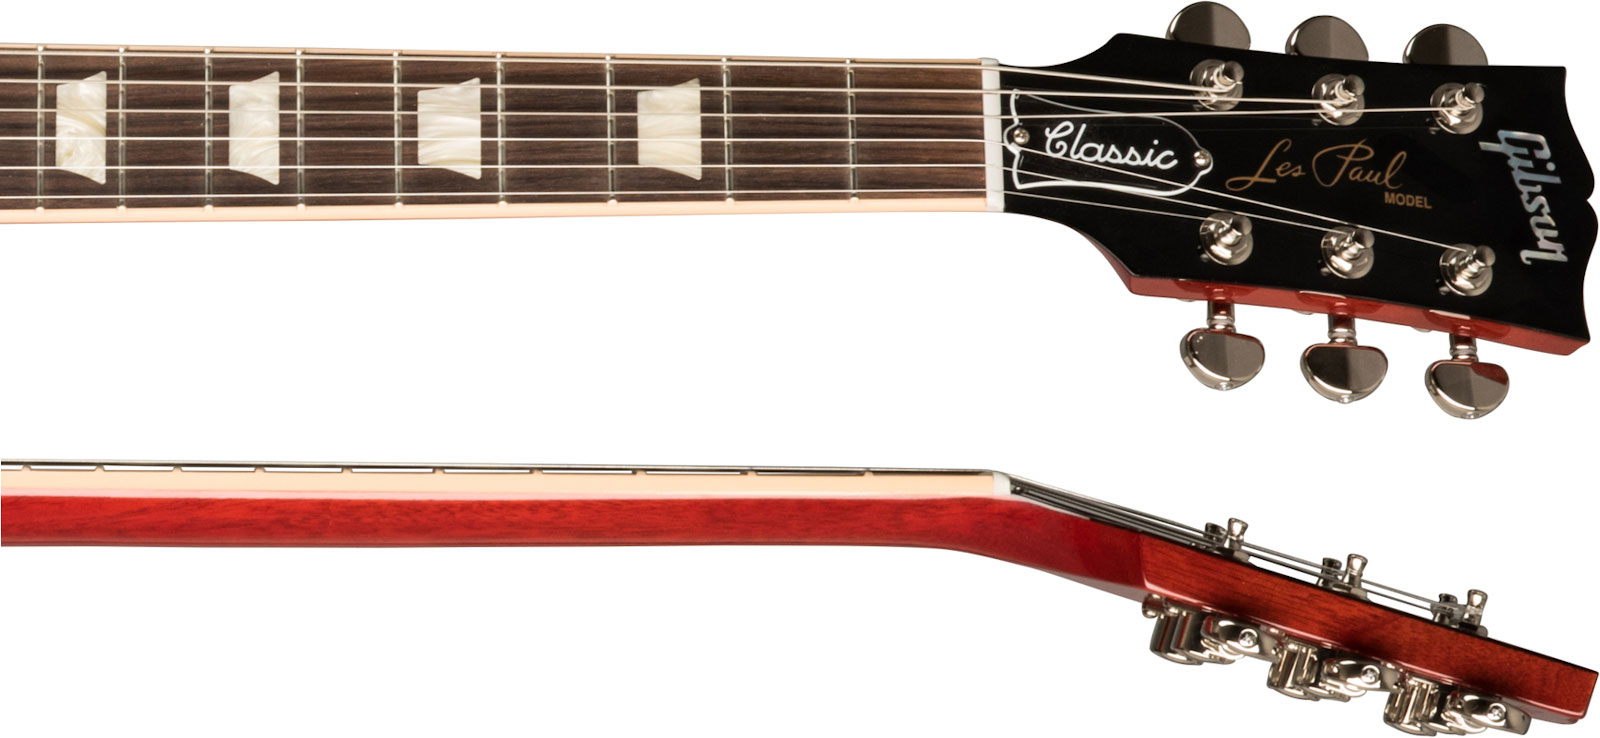 Gibson Les Paul Classic Modern 2h Ht Rw - Trans Cherry - Single cut electric guitar - Variation 3